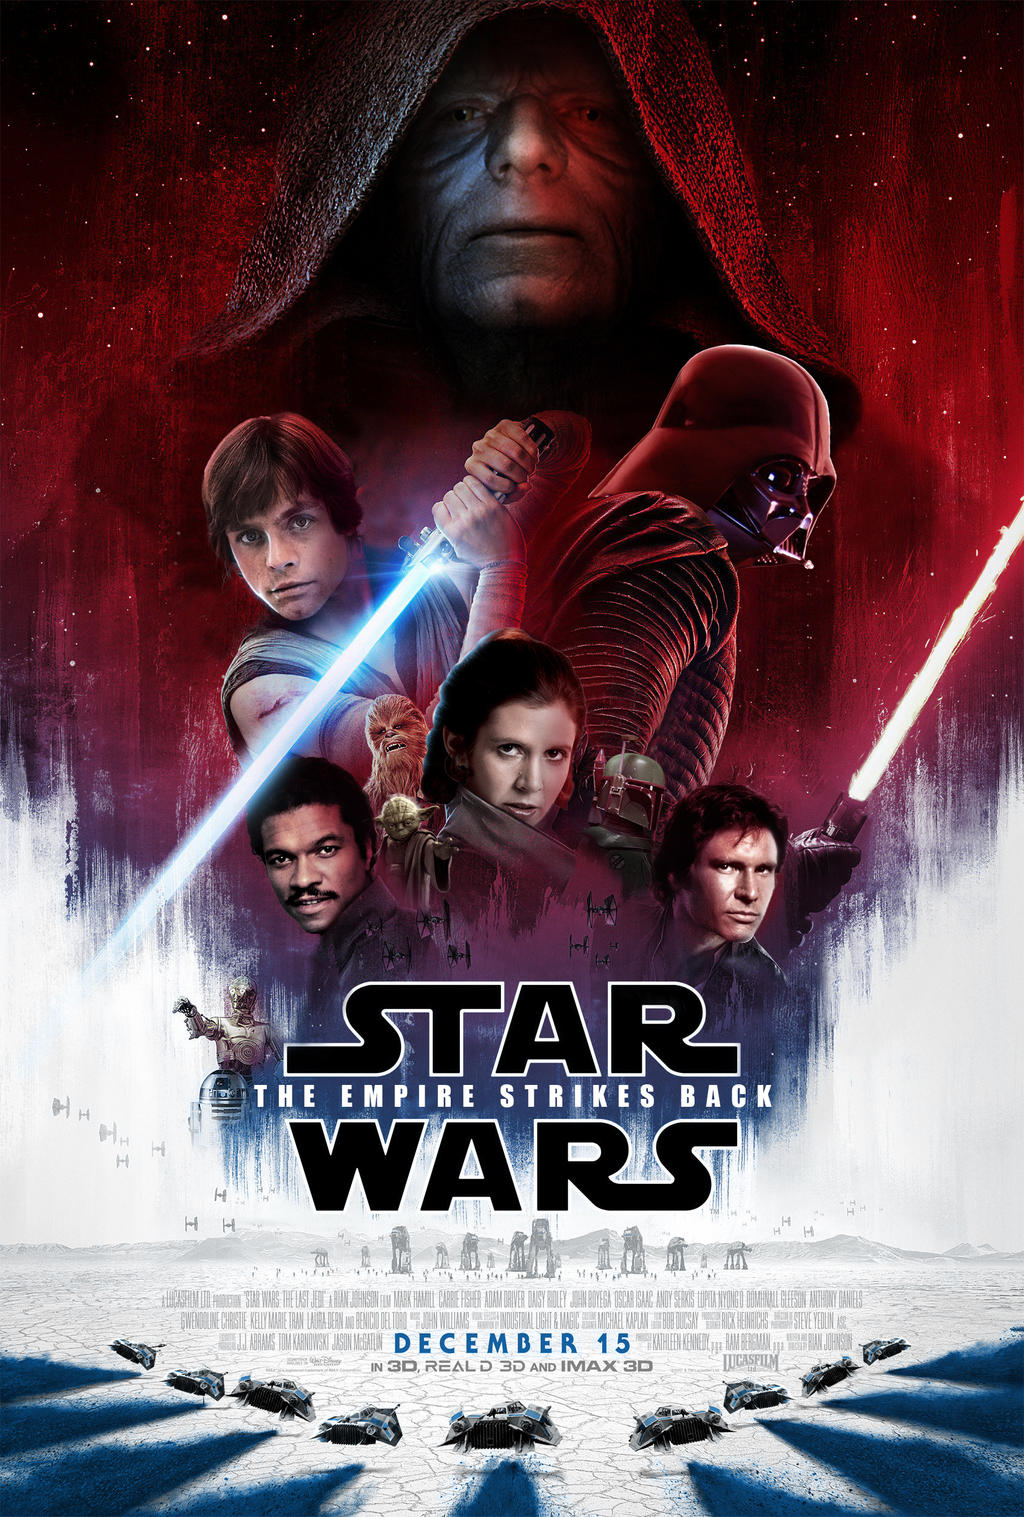 Star Wars: The Empire Strikes Back - fanart by Uebelator on DeviantArt